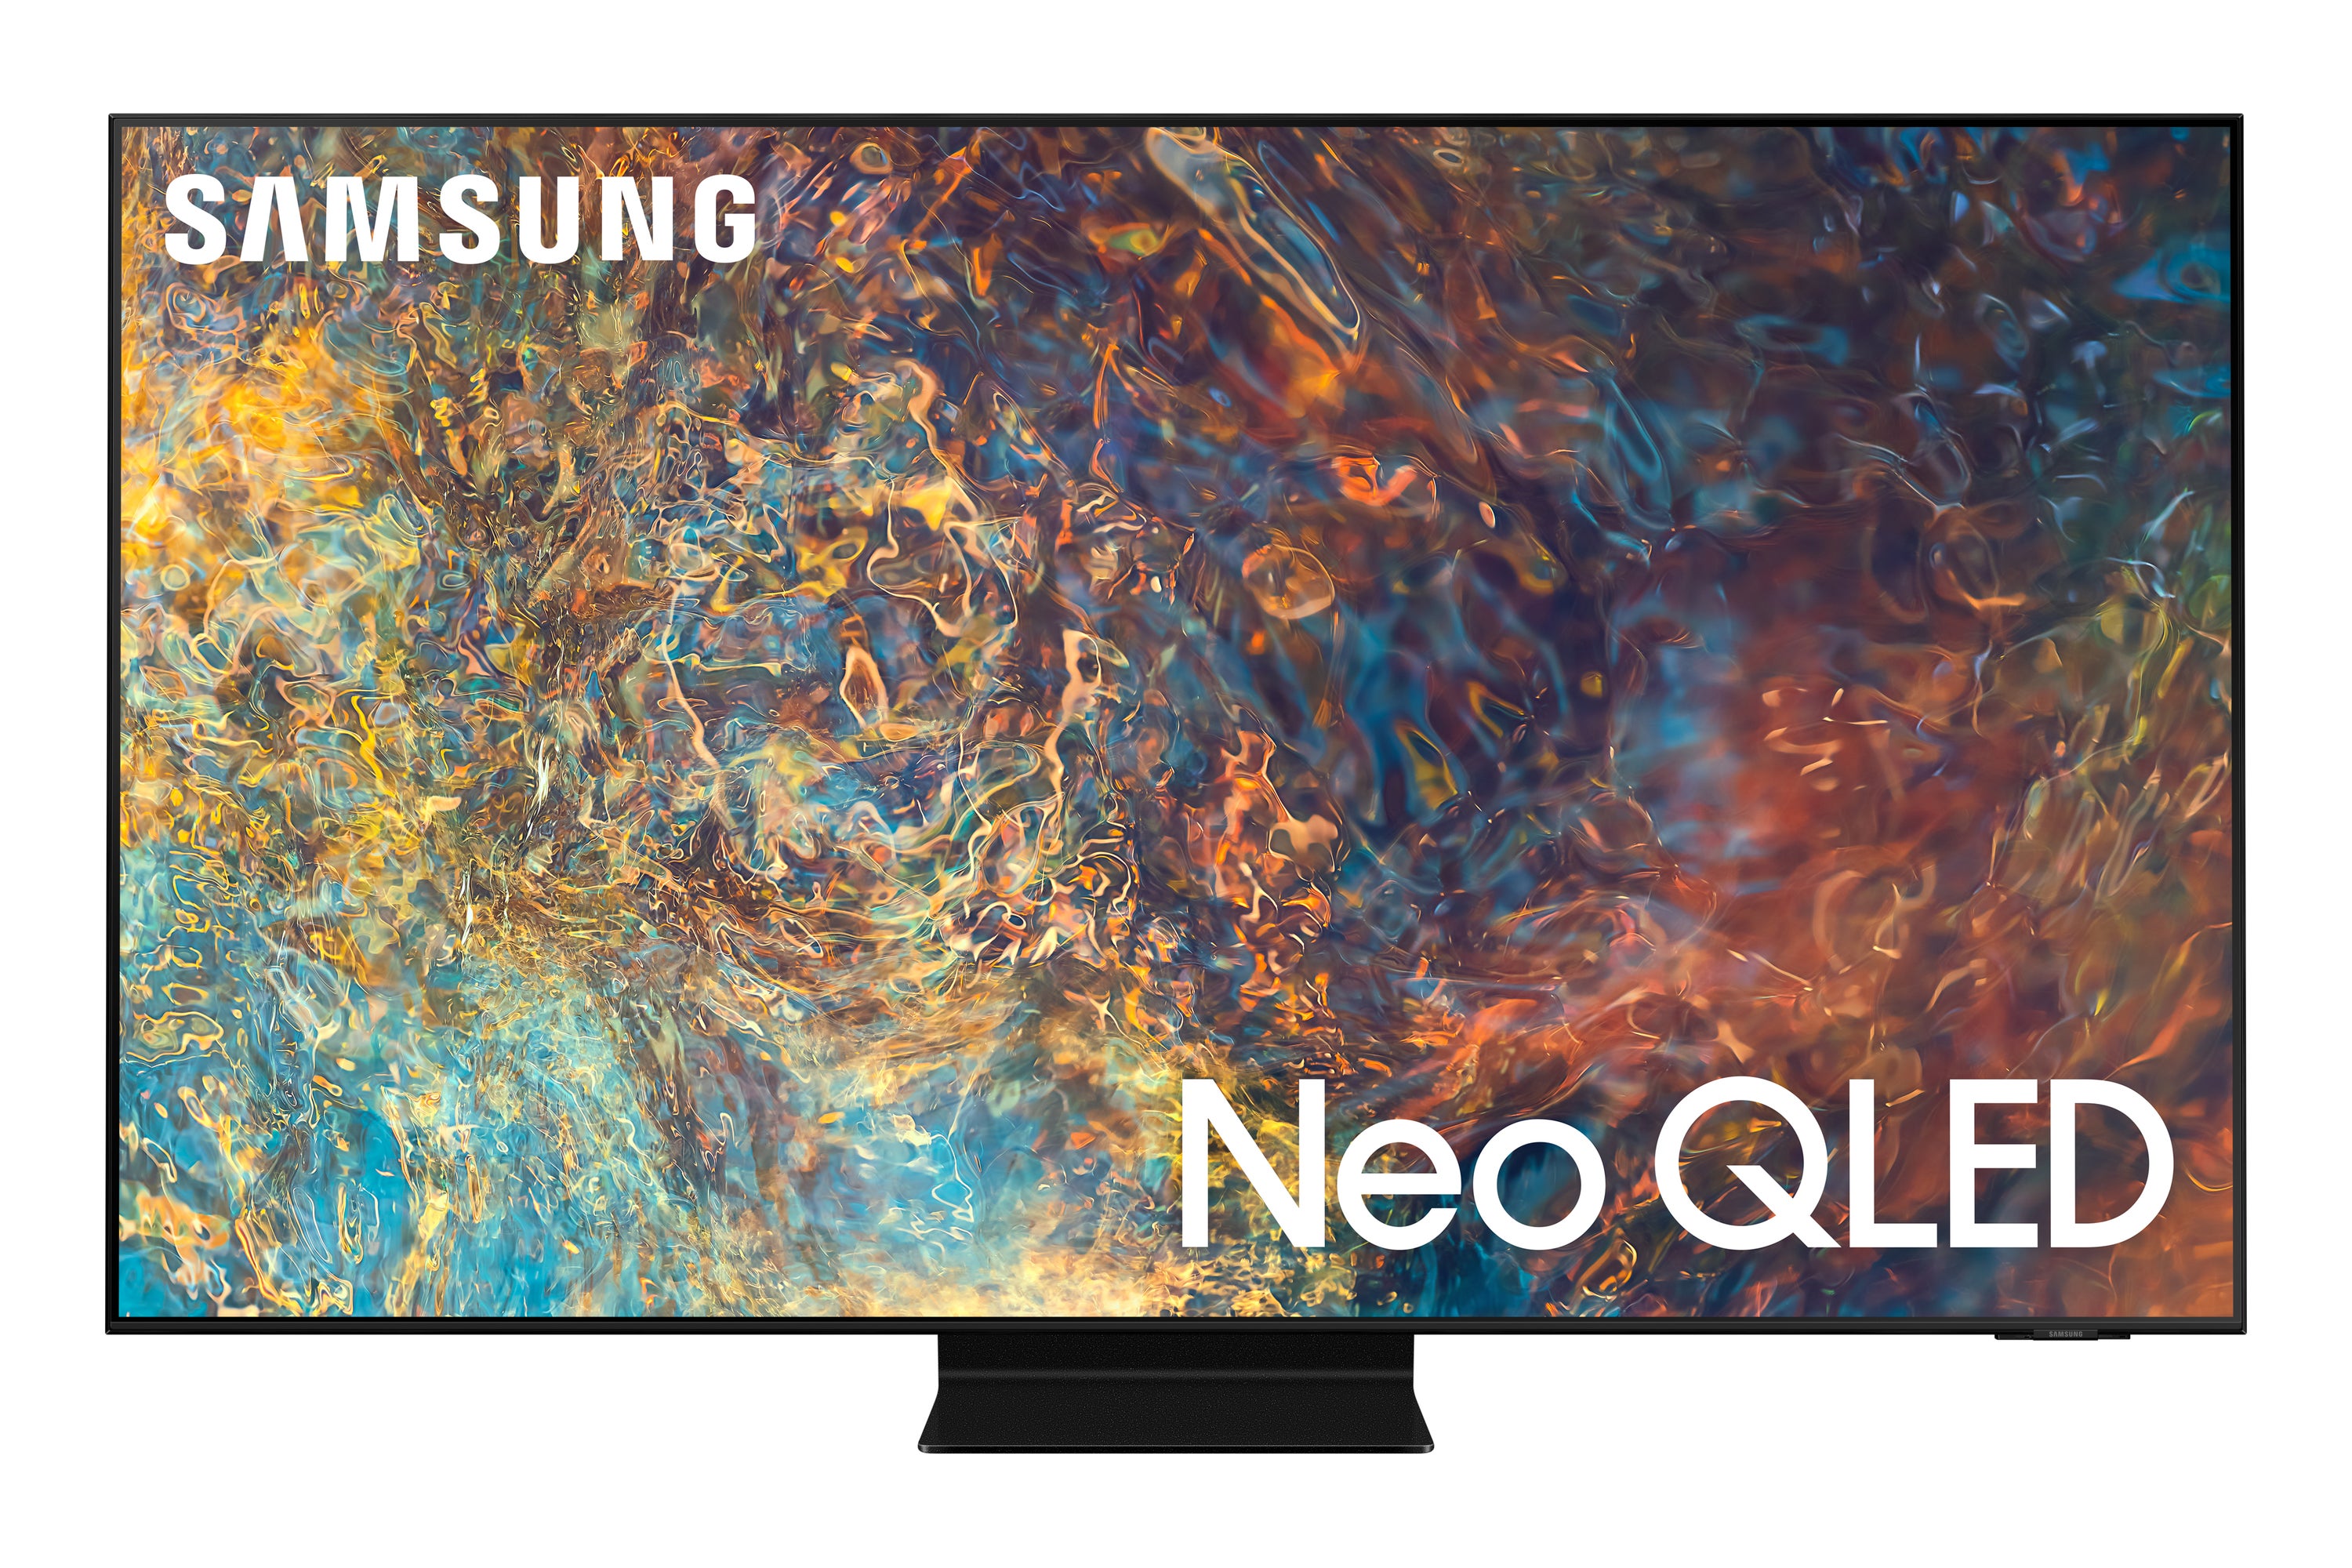 SAMSUNG 55" Class Neo QLED 4K (2160P) LED Smart TV QN55QN90 2021 - image 1 of 11